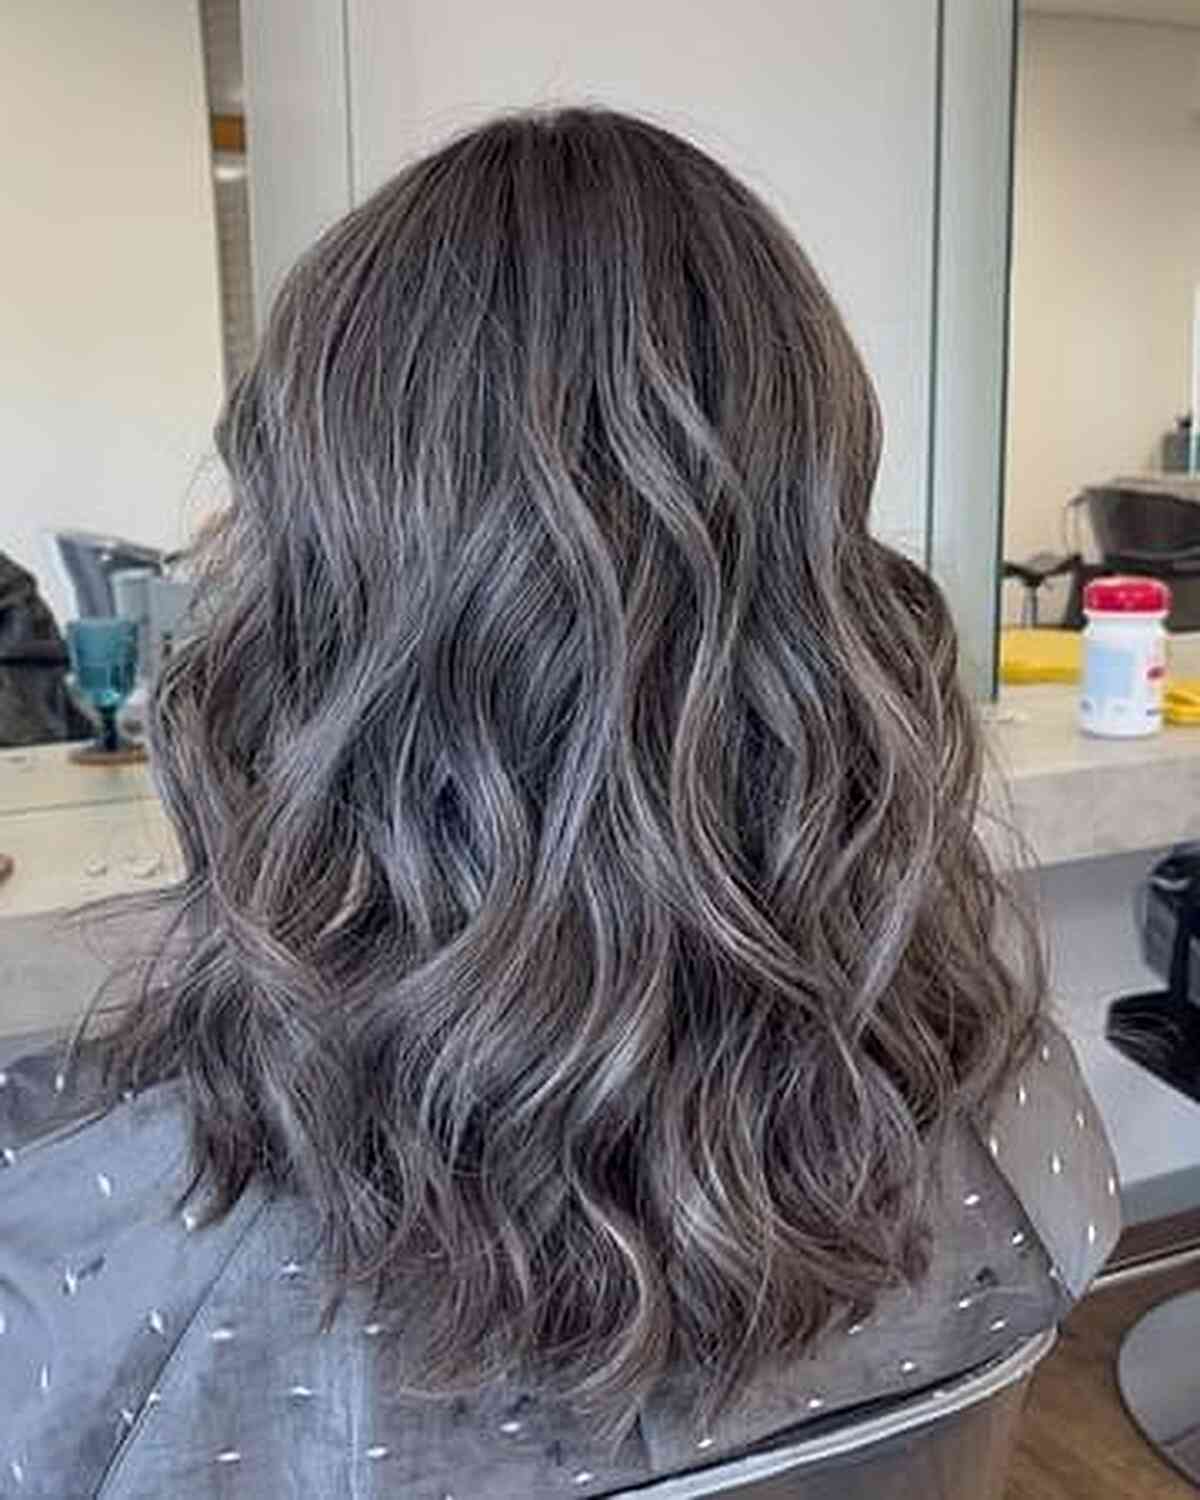 Smokey Silver Balayage Babylights on Medium-Length Wavy Hair